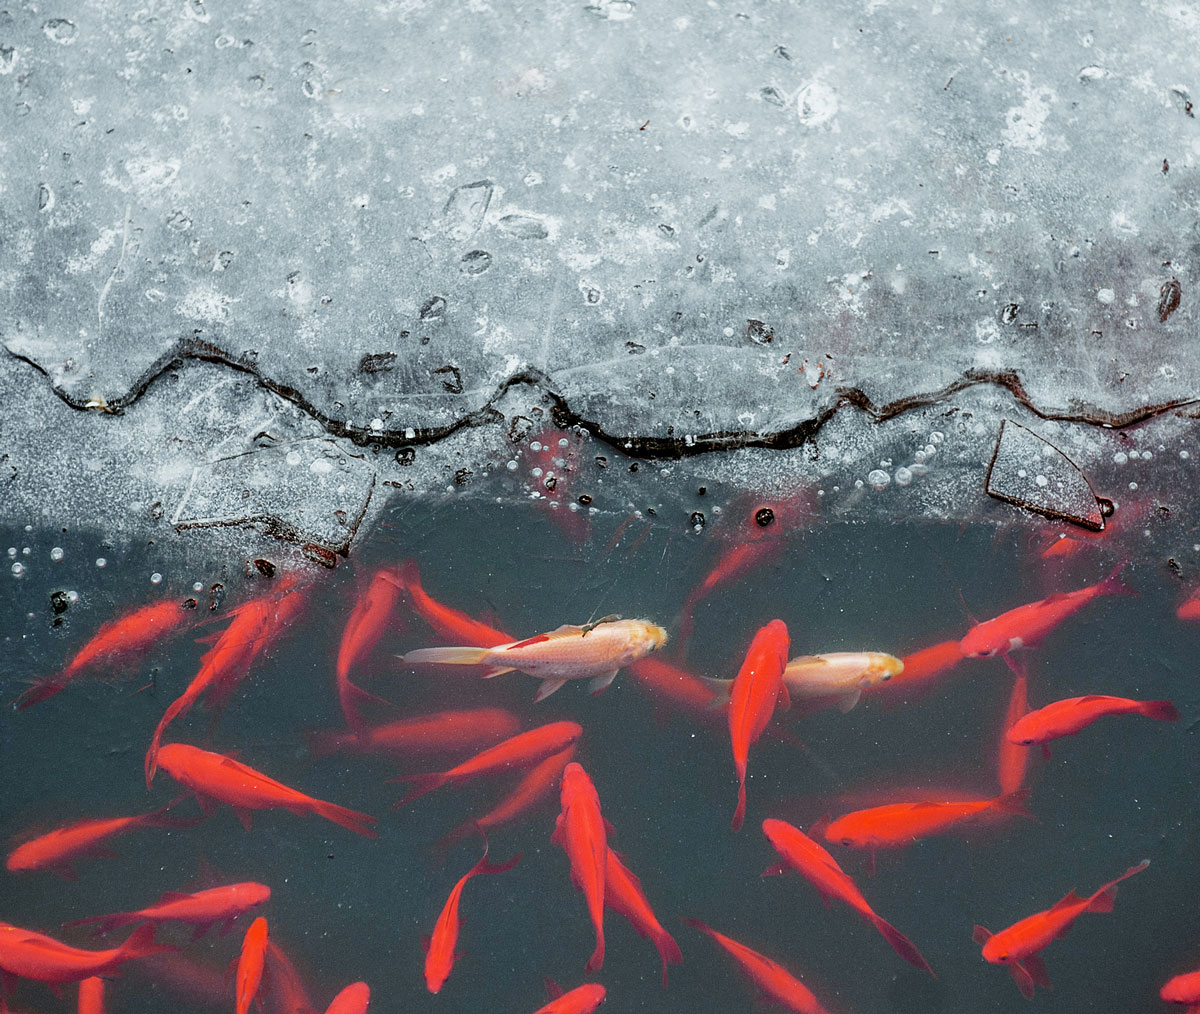 Ryby v zamrznutom jazierku